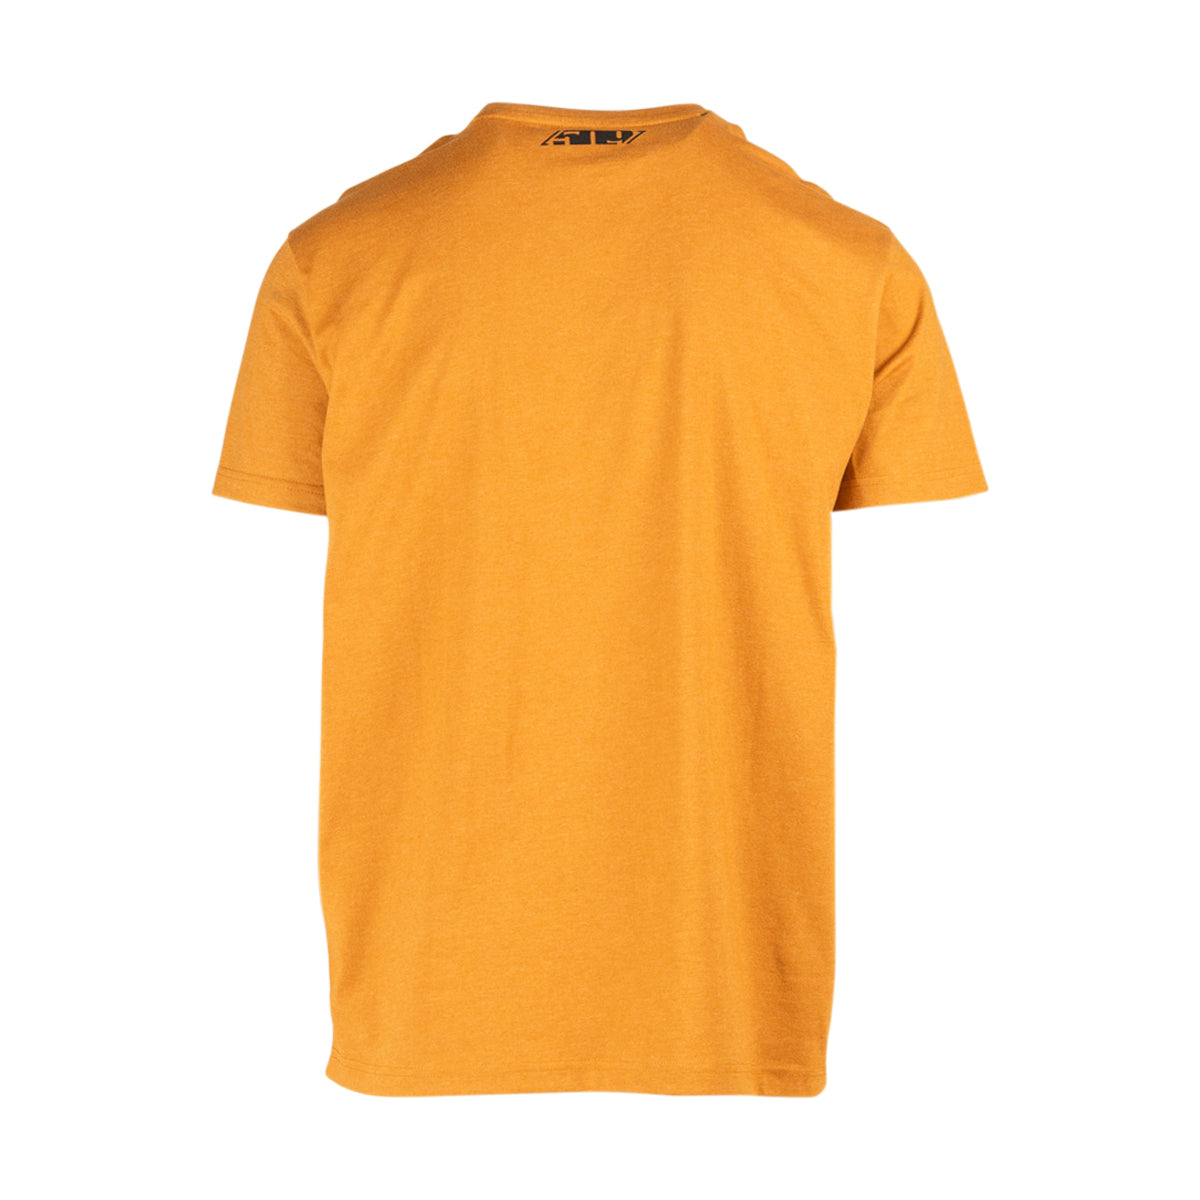 509 Arsenal Pocket T-Shirt F09001201-150-901